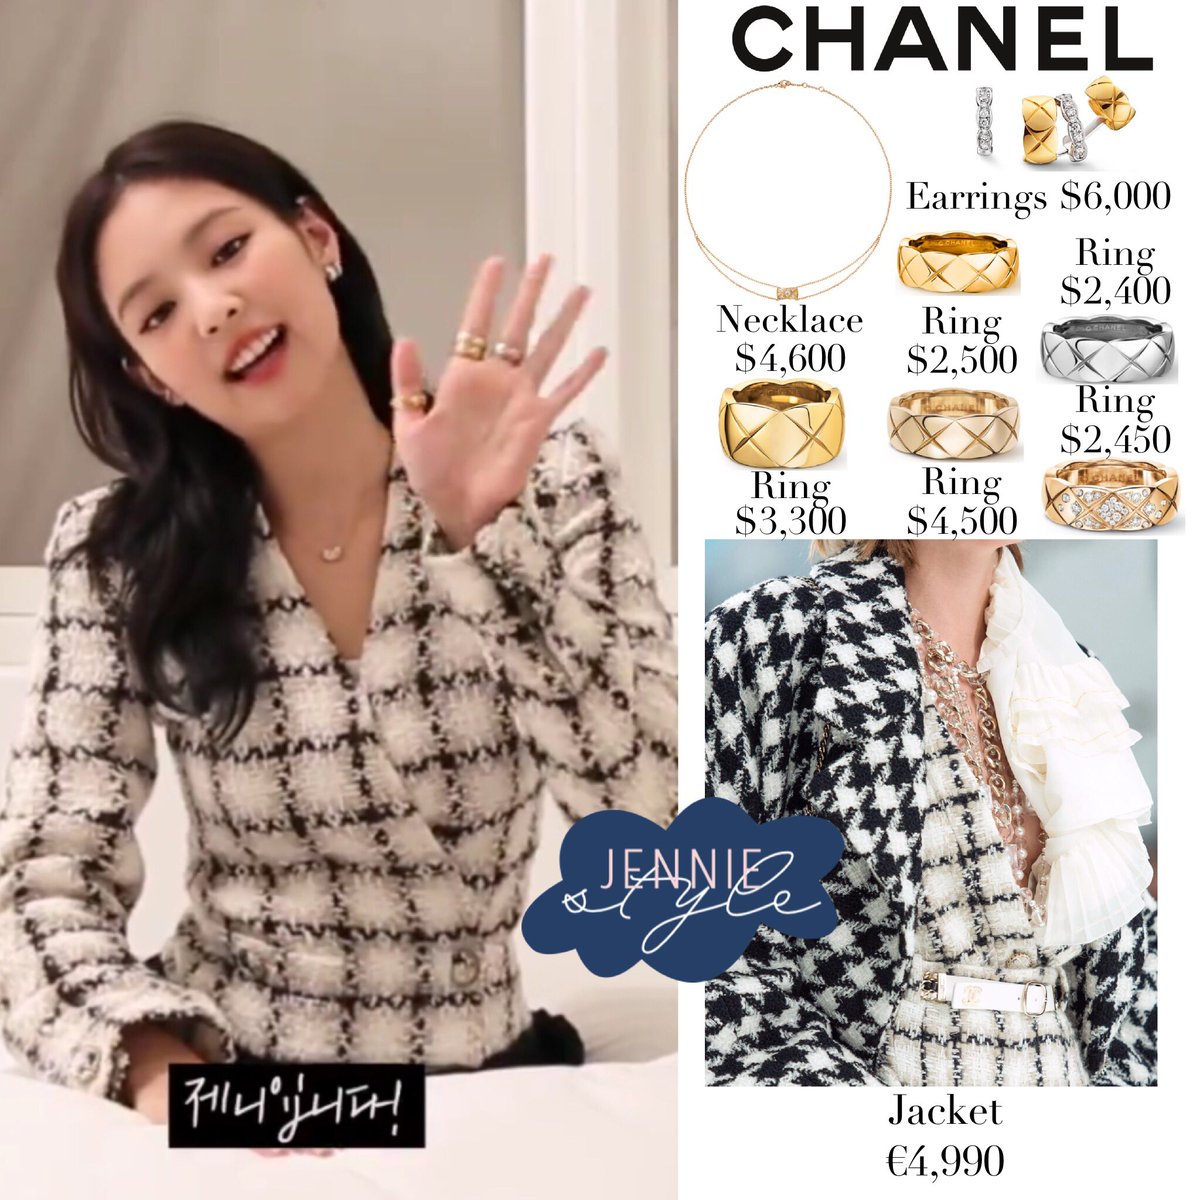 BLACKPINK's Jennie in Chanel Jewelry Campaign